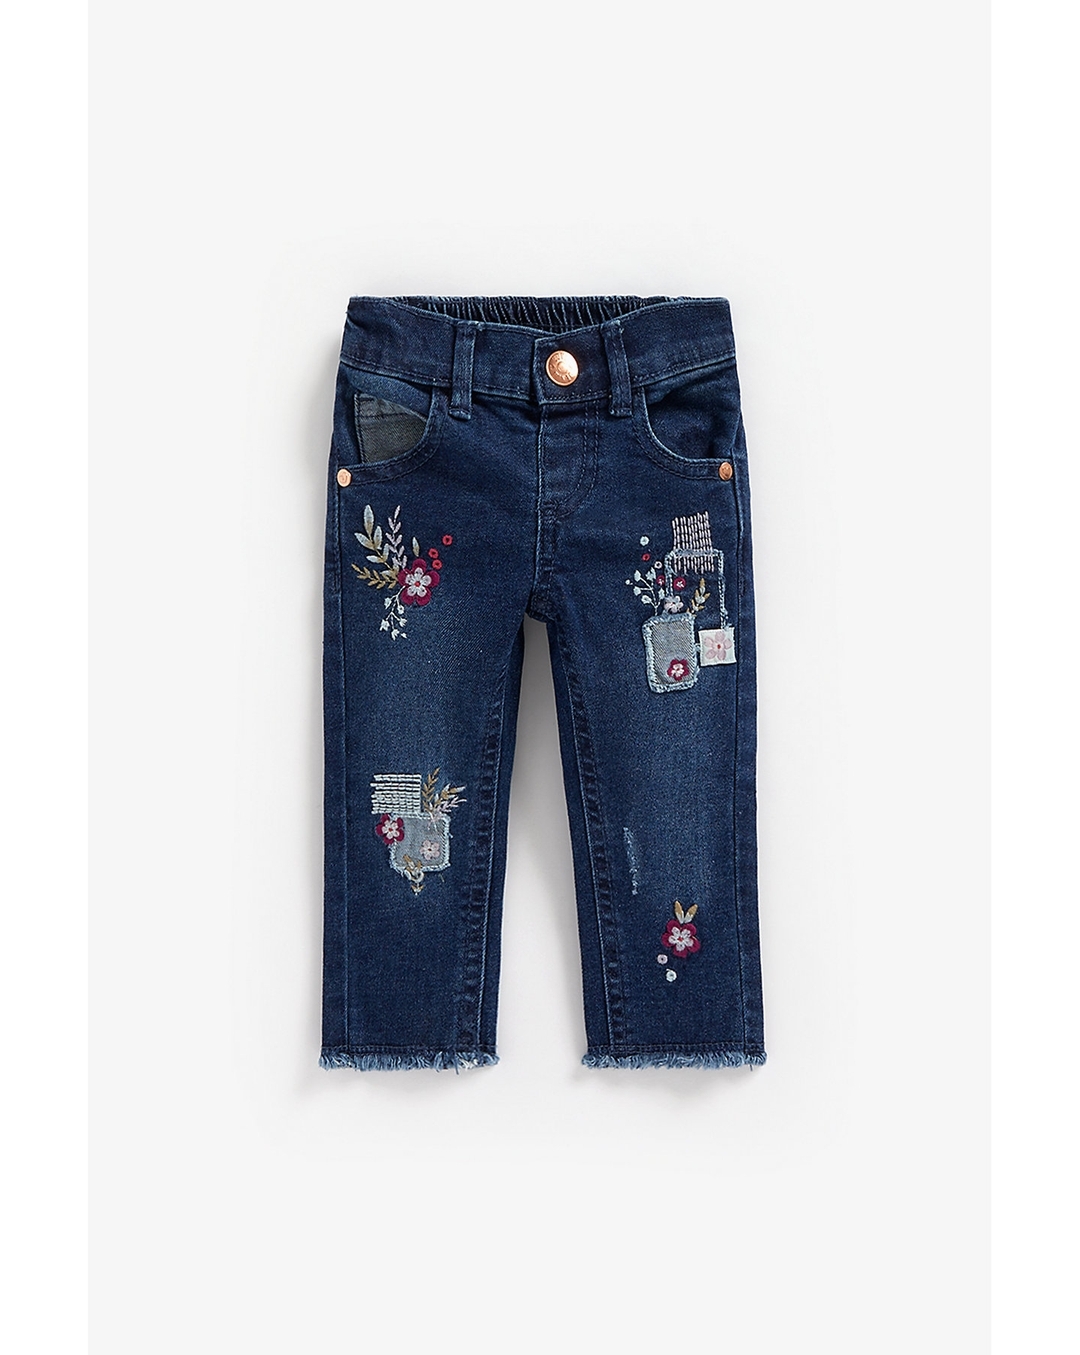 2021 kids clothes girls jeans pants| Alibaba.com